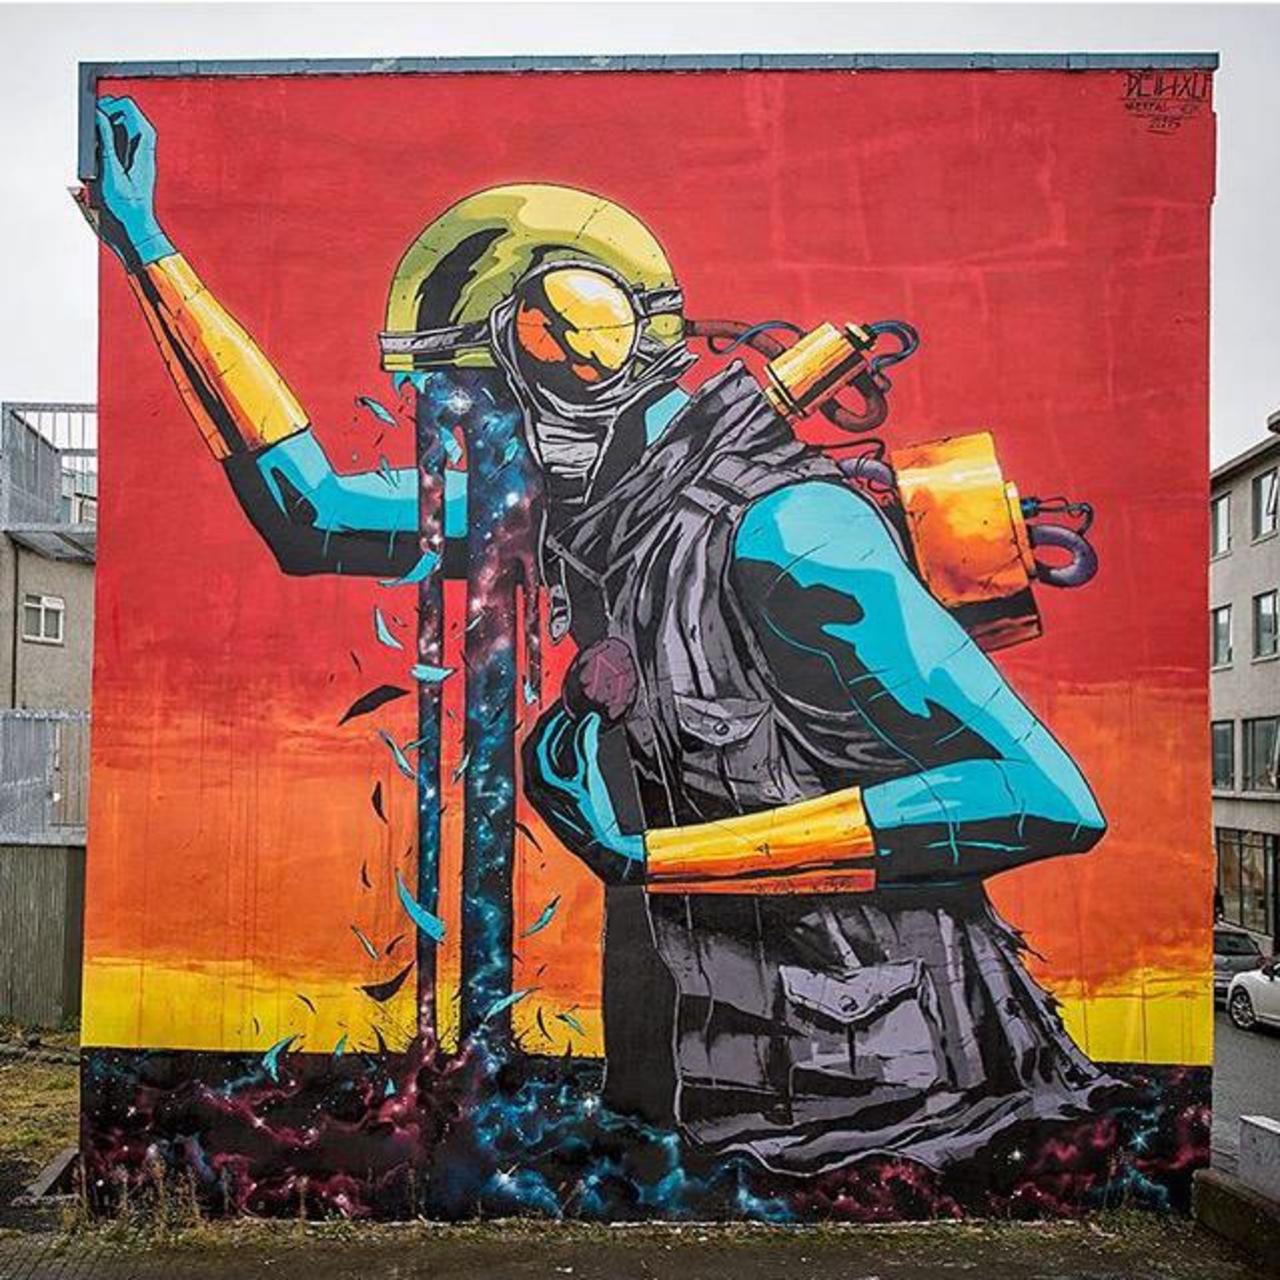 RT ArchaicManor "Street Art by Deih in Reykjavik 

#art #graffiti #mural #streetart https://t.co/9gHCzvrpfz yo"